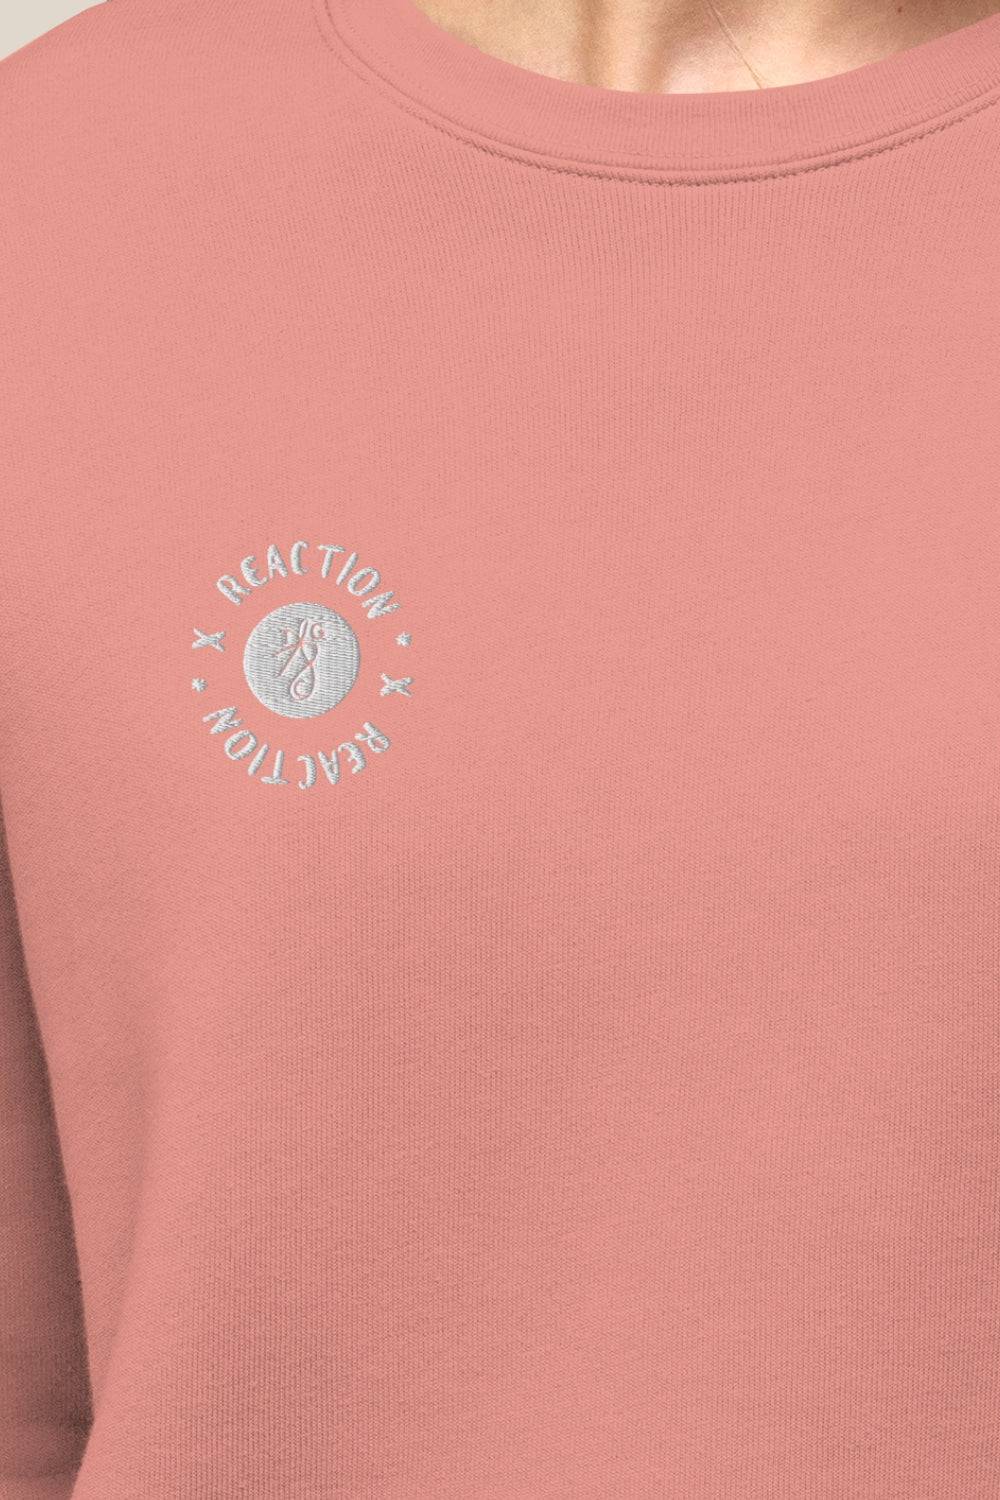 TGC X Reaction Pink Cropped Sweatshirt - TGC Boutique - Cropped Sweatshirt